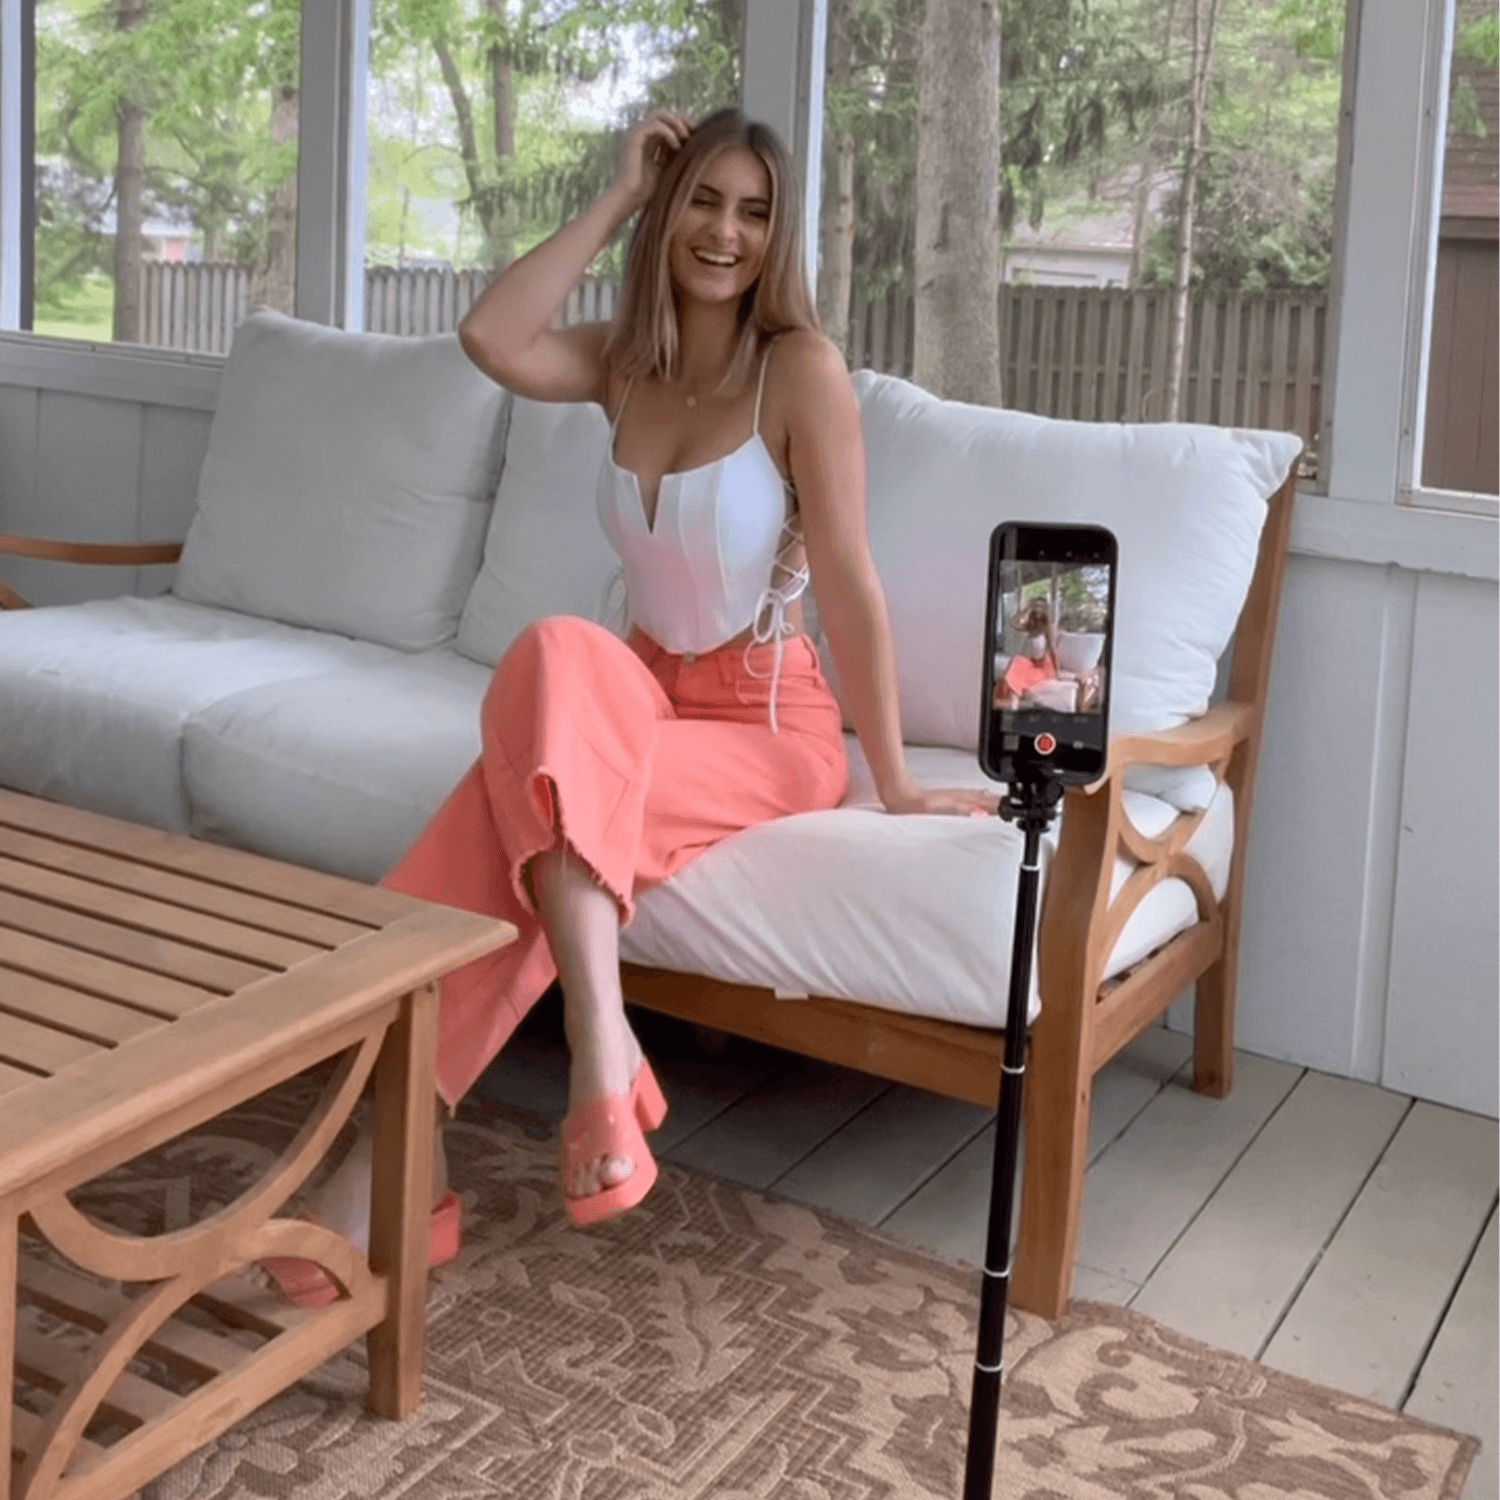 Mini trépied portable montage Selfie bâton extensi – Grandado